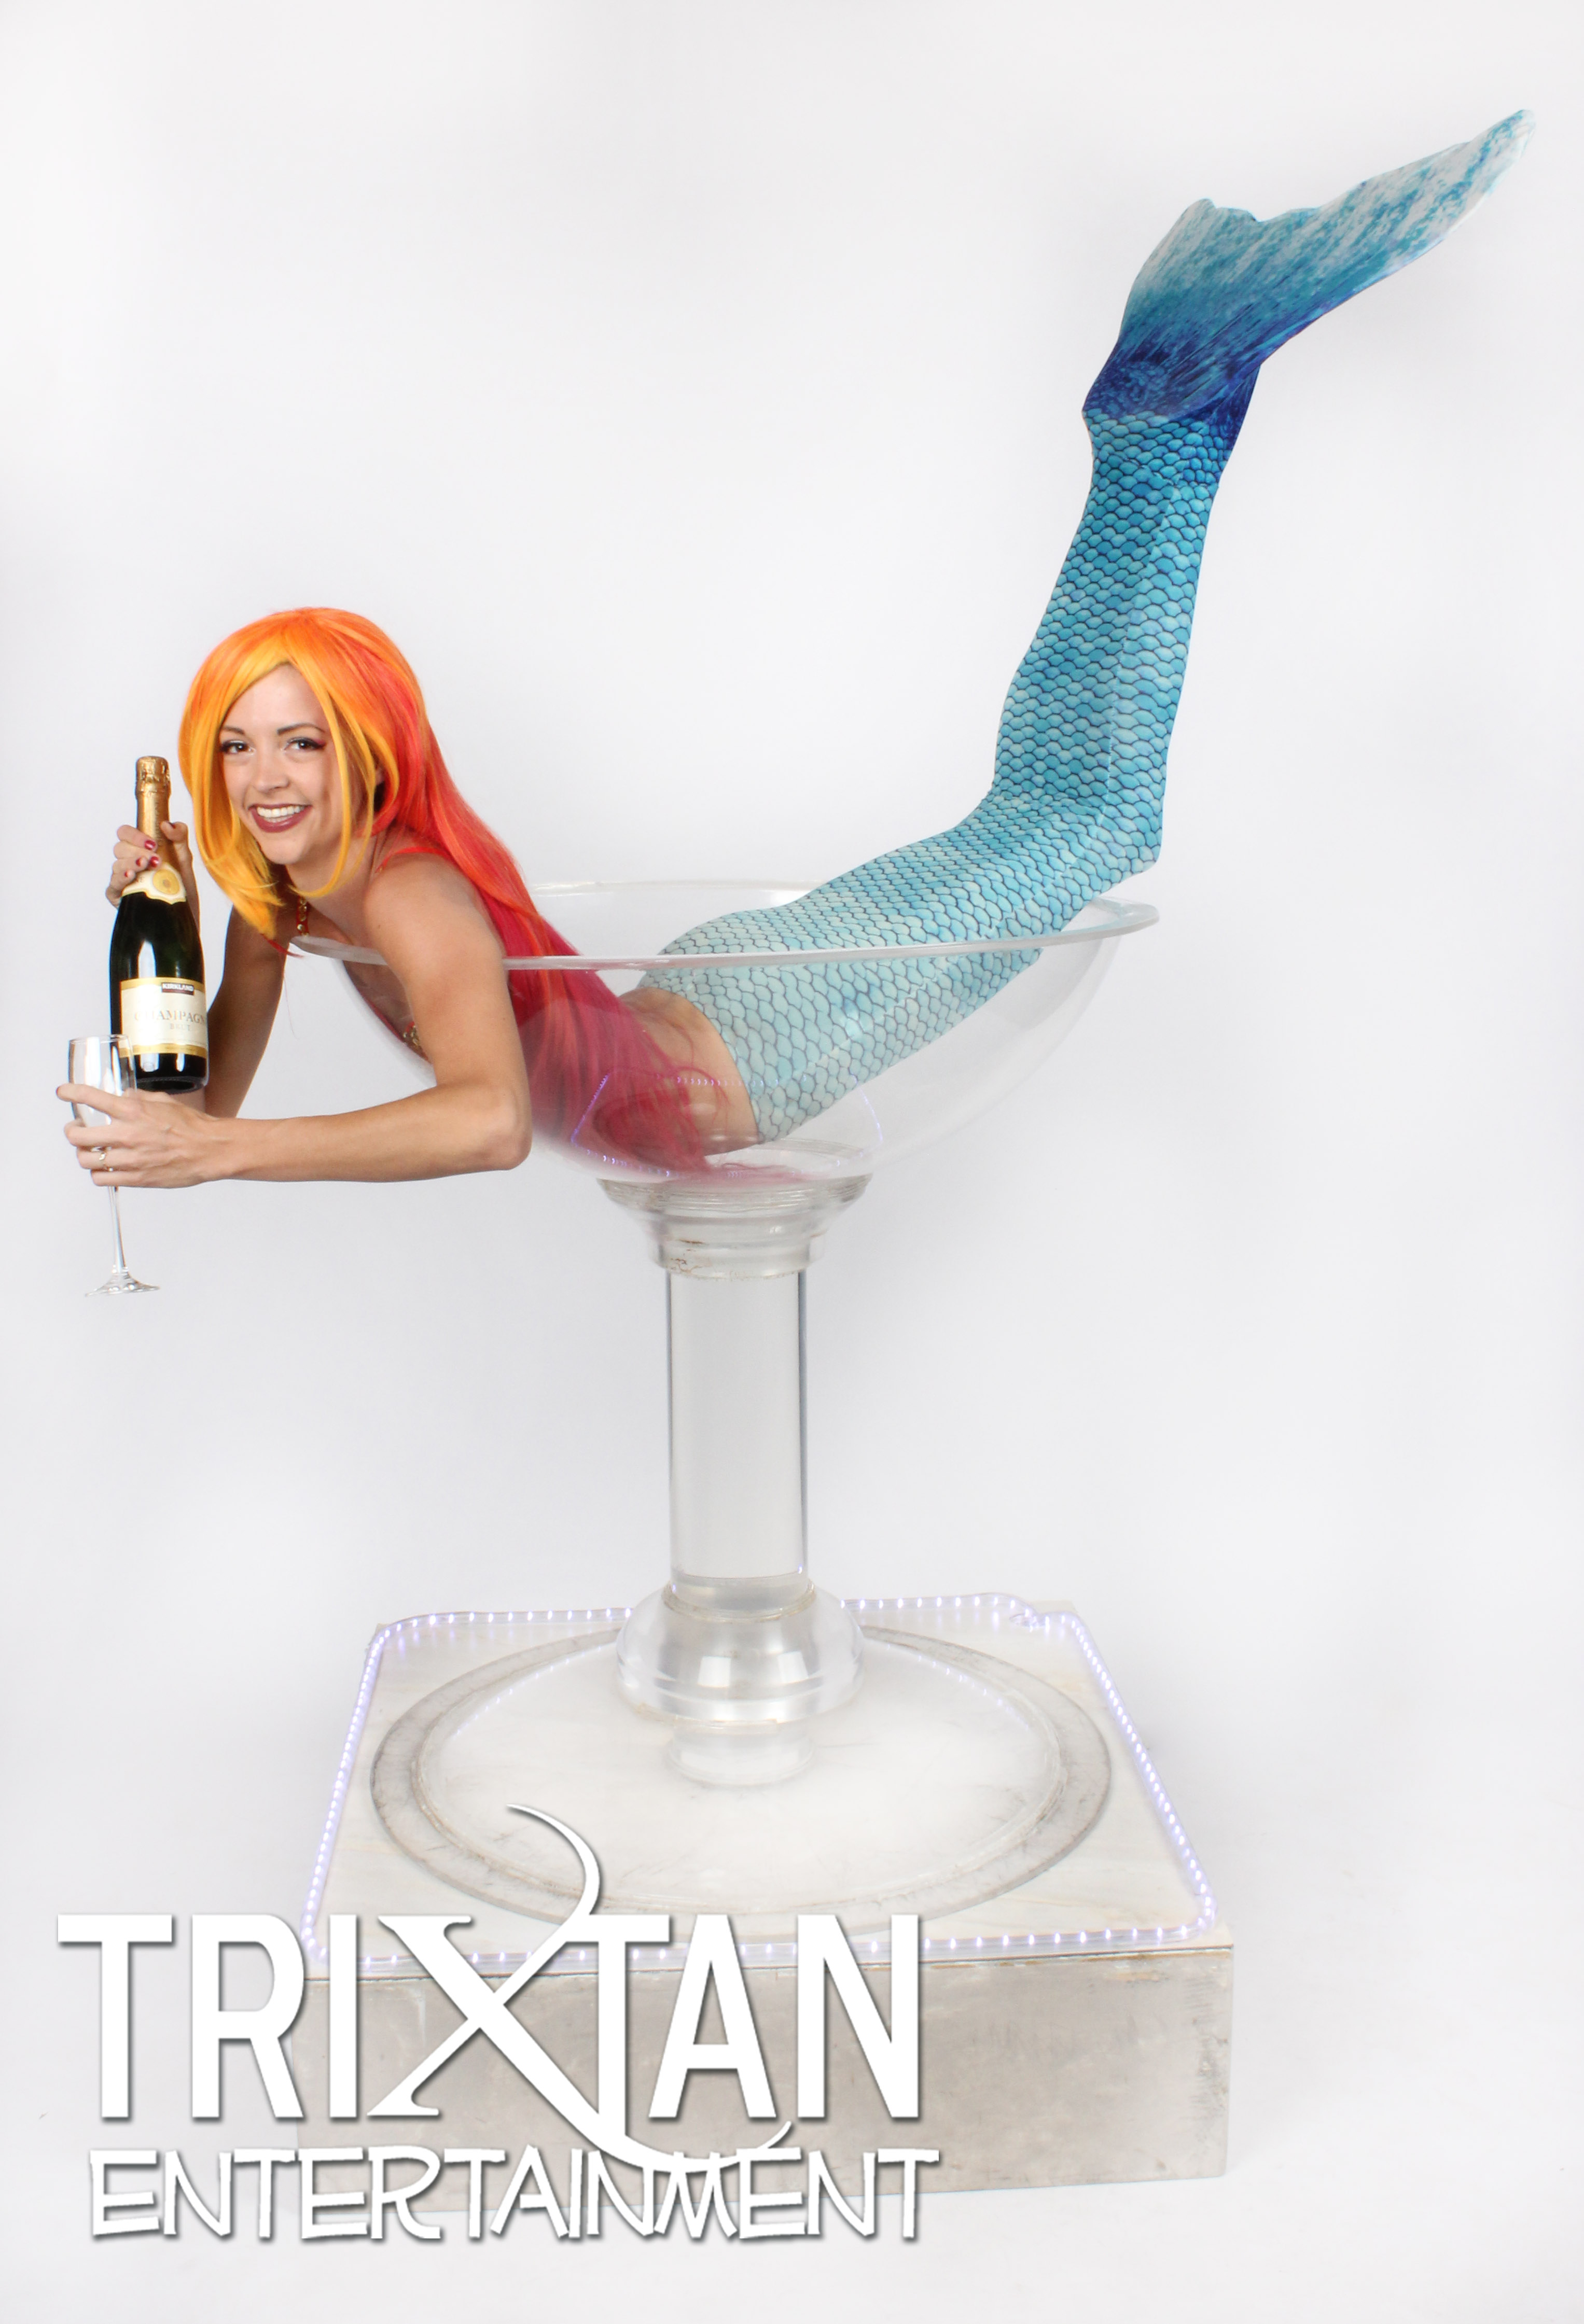 martini, mermaid, blue tail, champagne, red hair, orange hair. giant martini glass